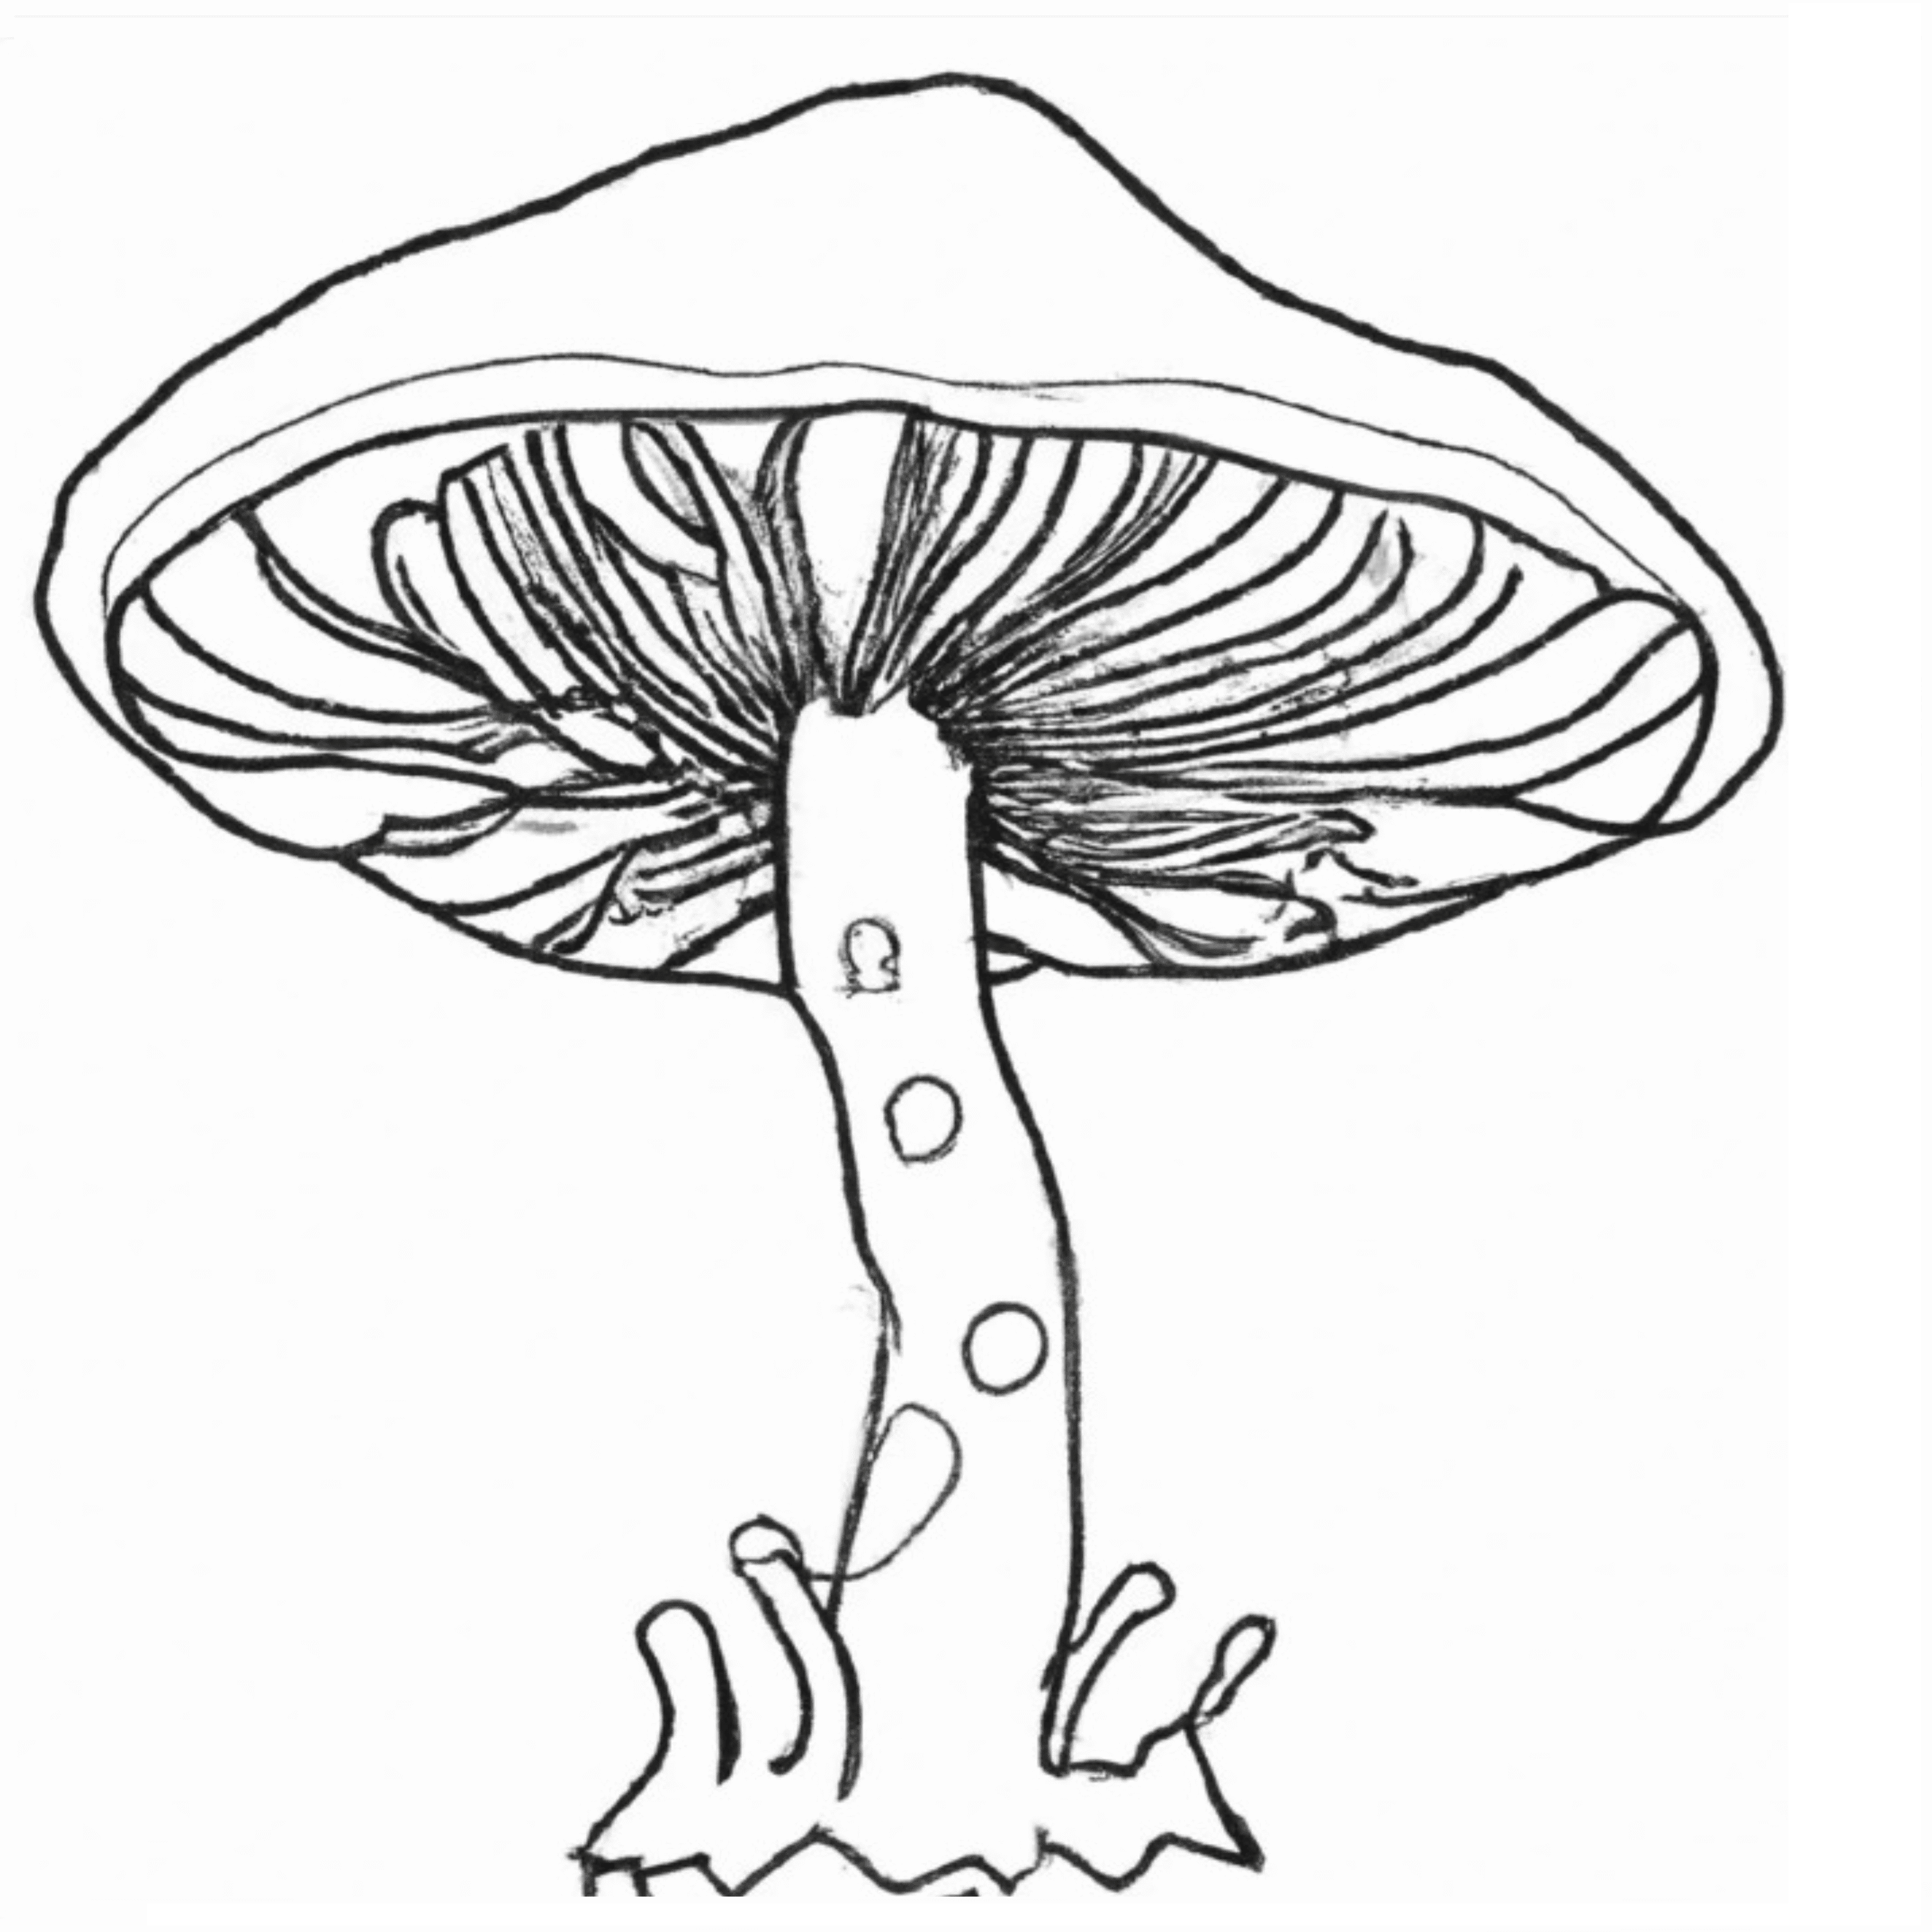 Line drawing of a magic mushroom